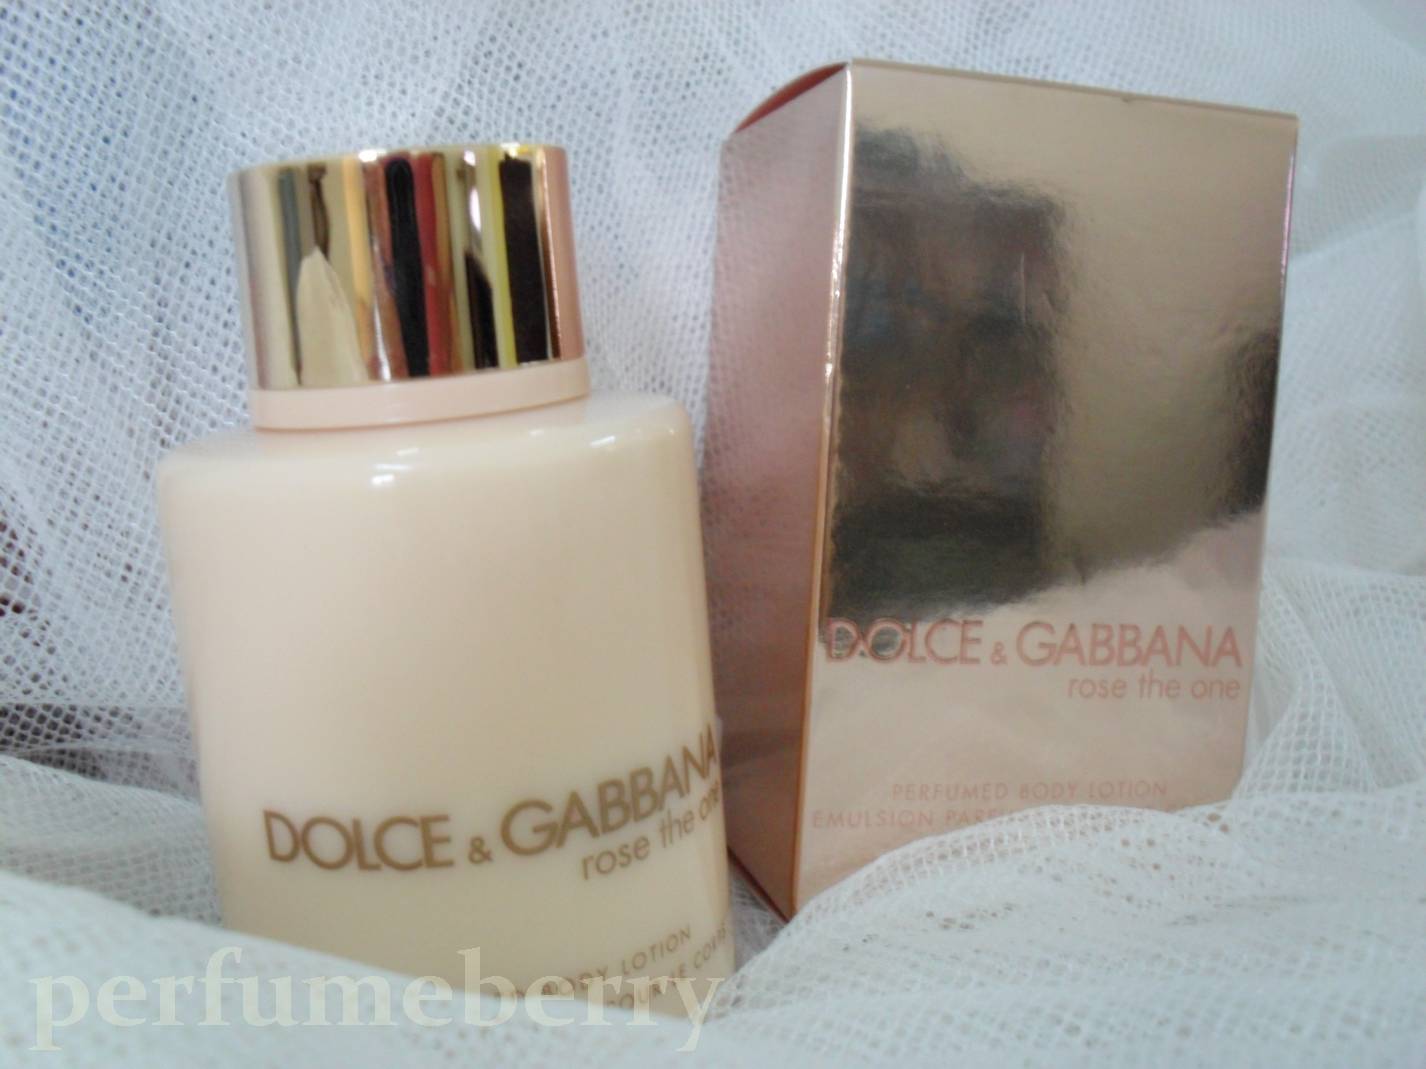 Dolce & Gabbana Perfume - Perfumeberry Blog